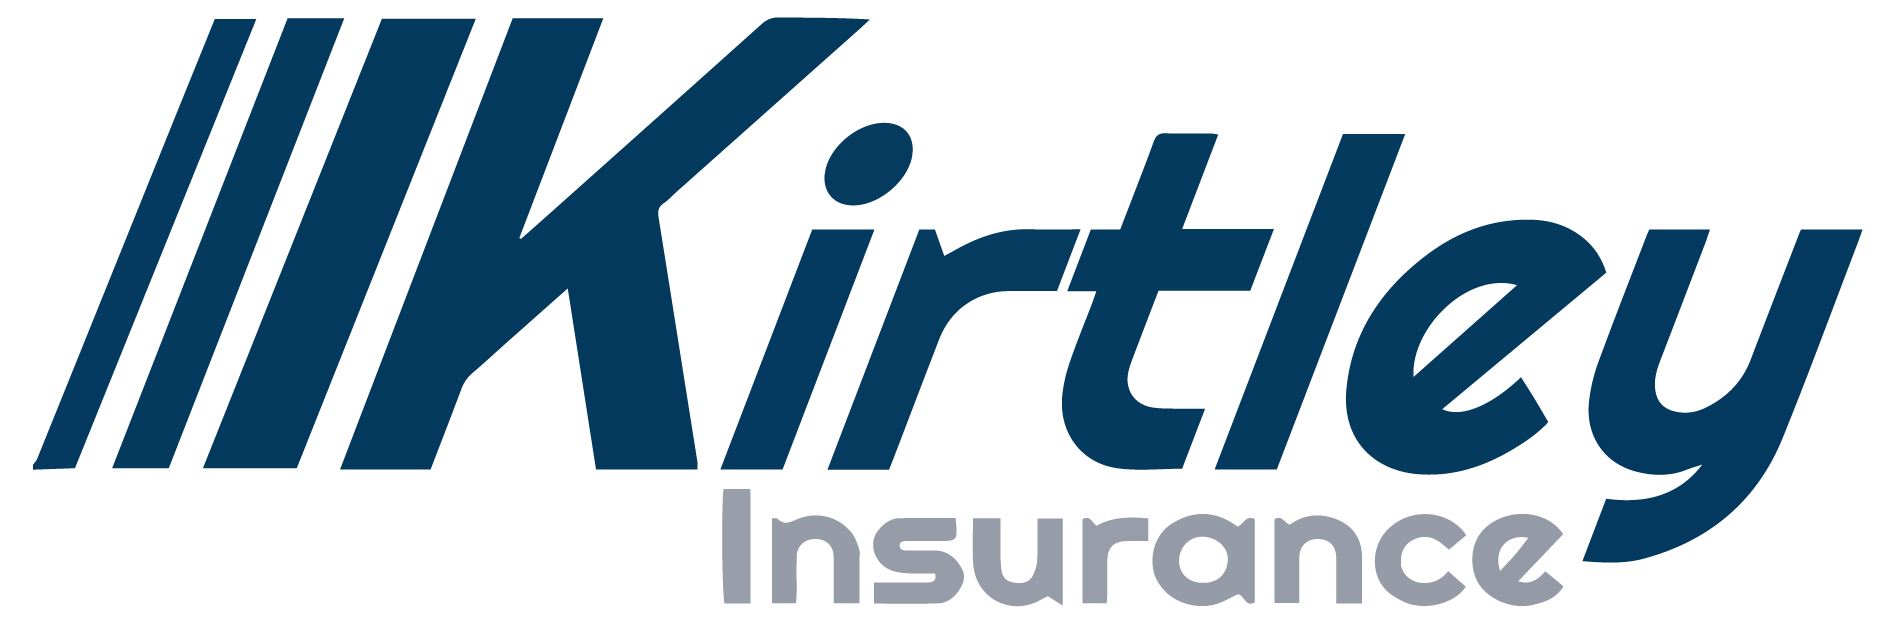 Kirtley Insurance